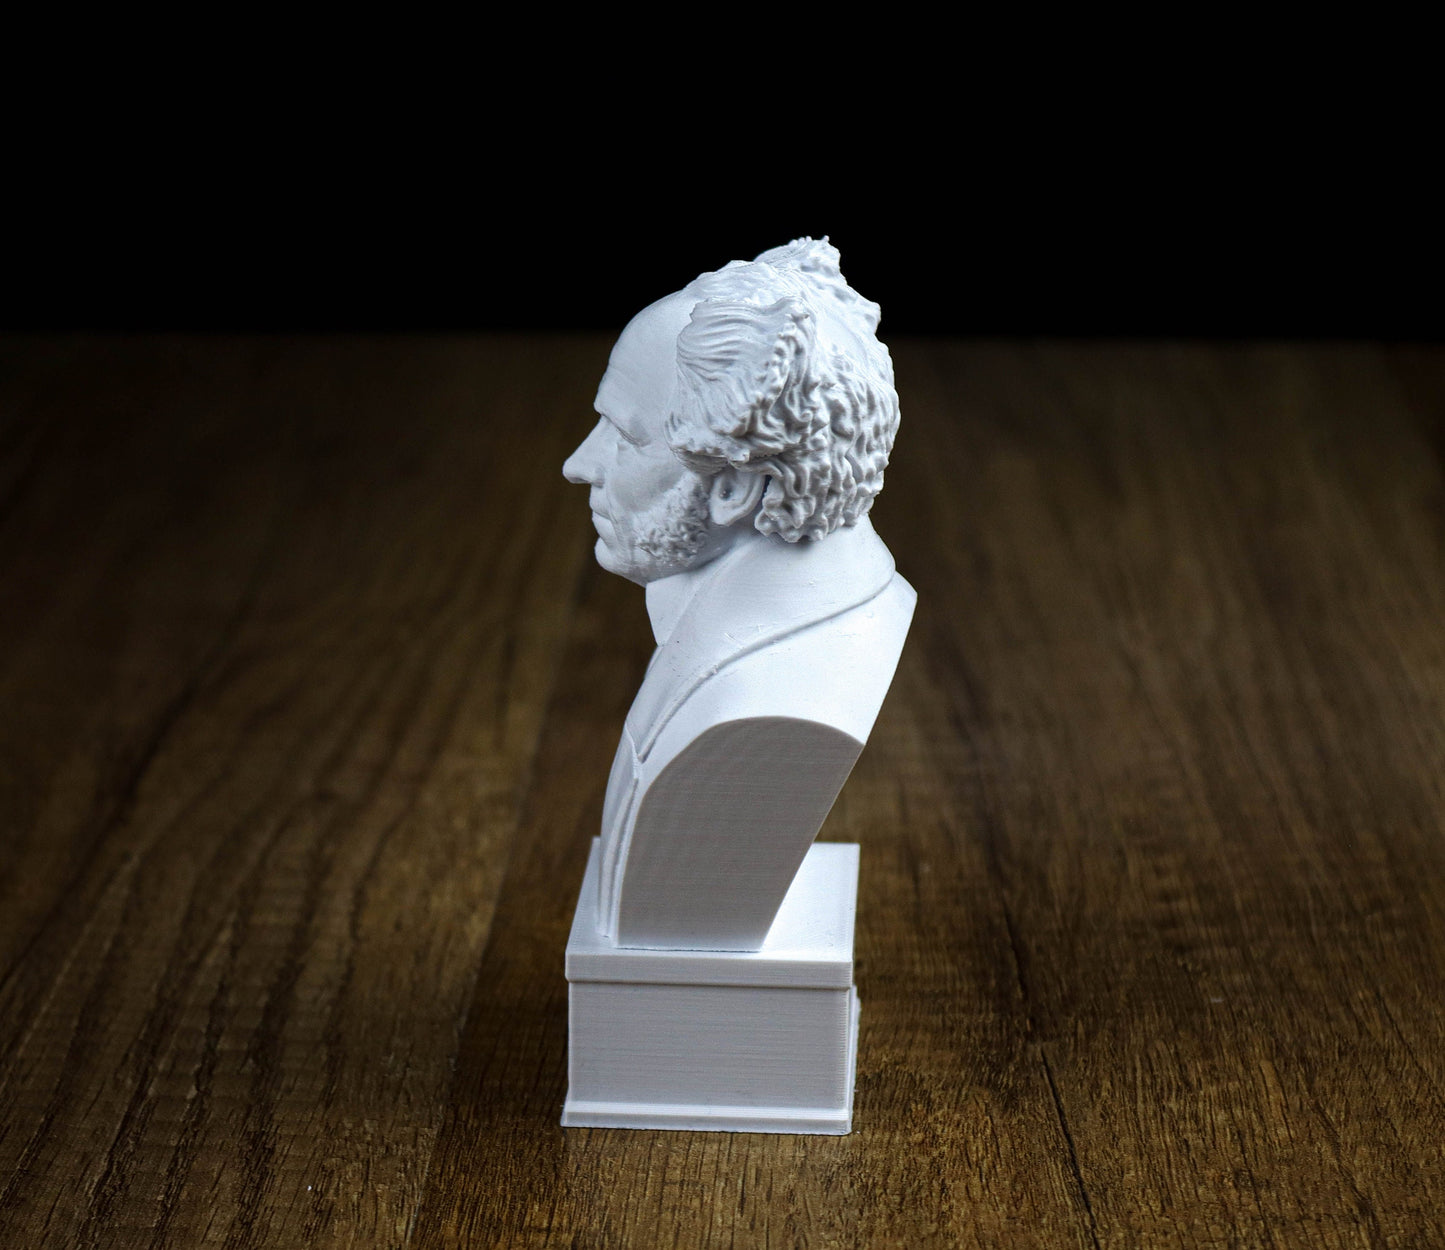 Arthur Schopenhauer Bust, German philosopher Statue, Sculpture Decoration ,Decor